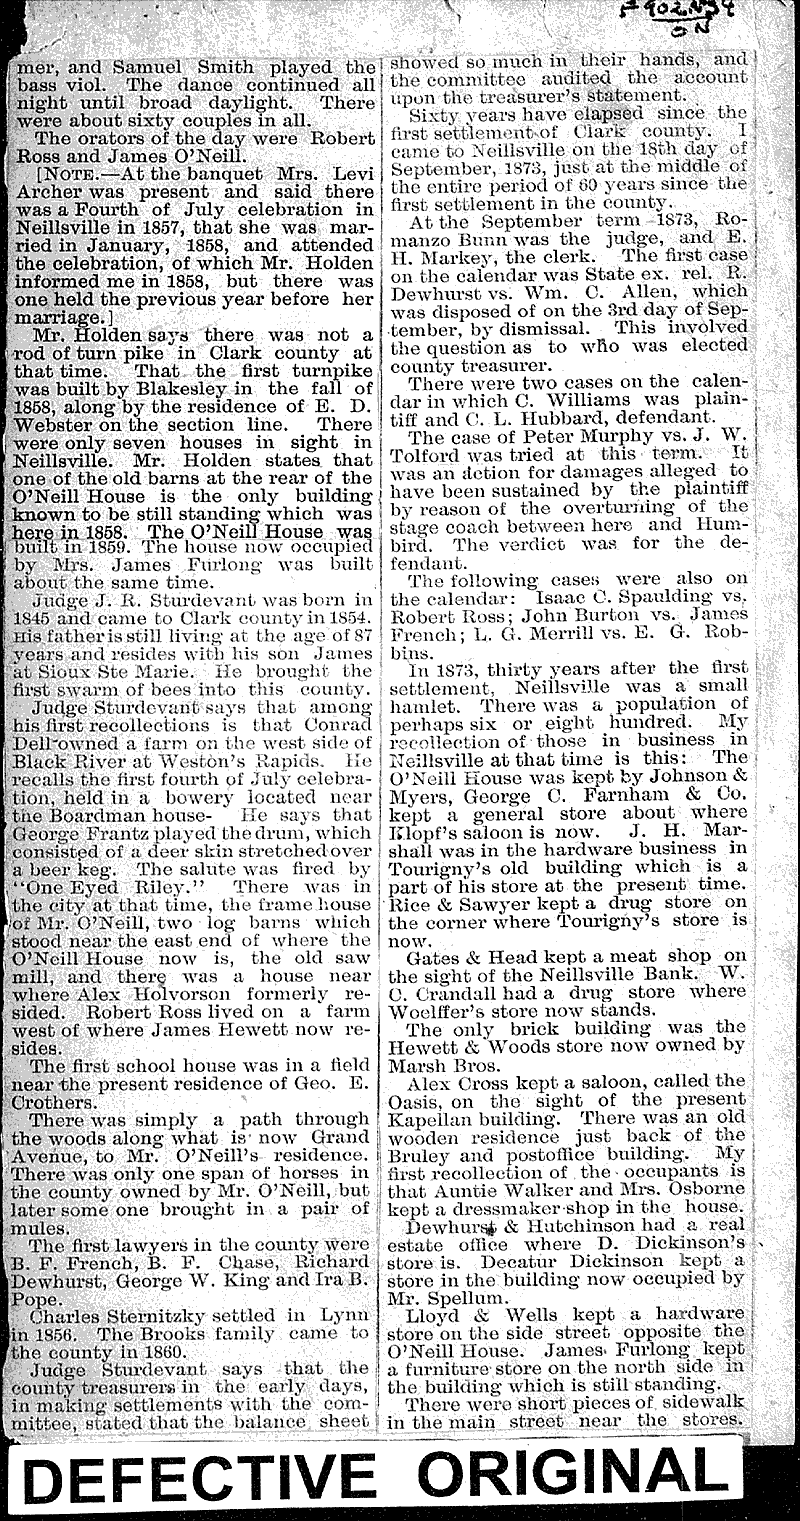  Source: Neillsville Republican and Press Date: 1904-01-28